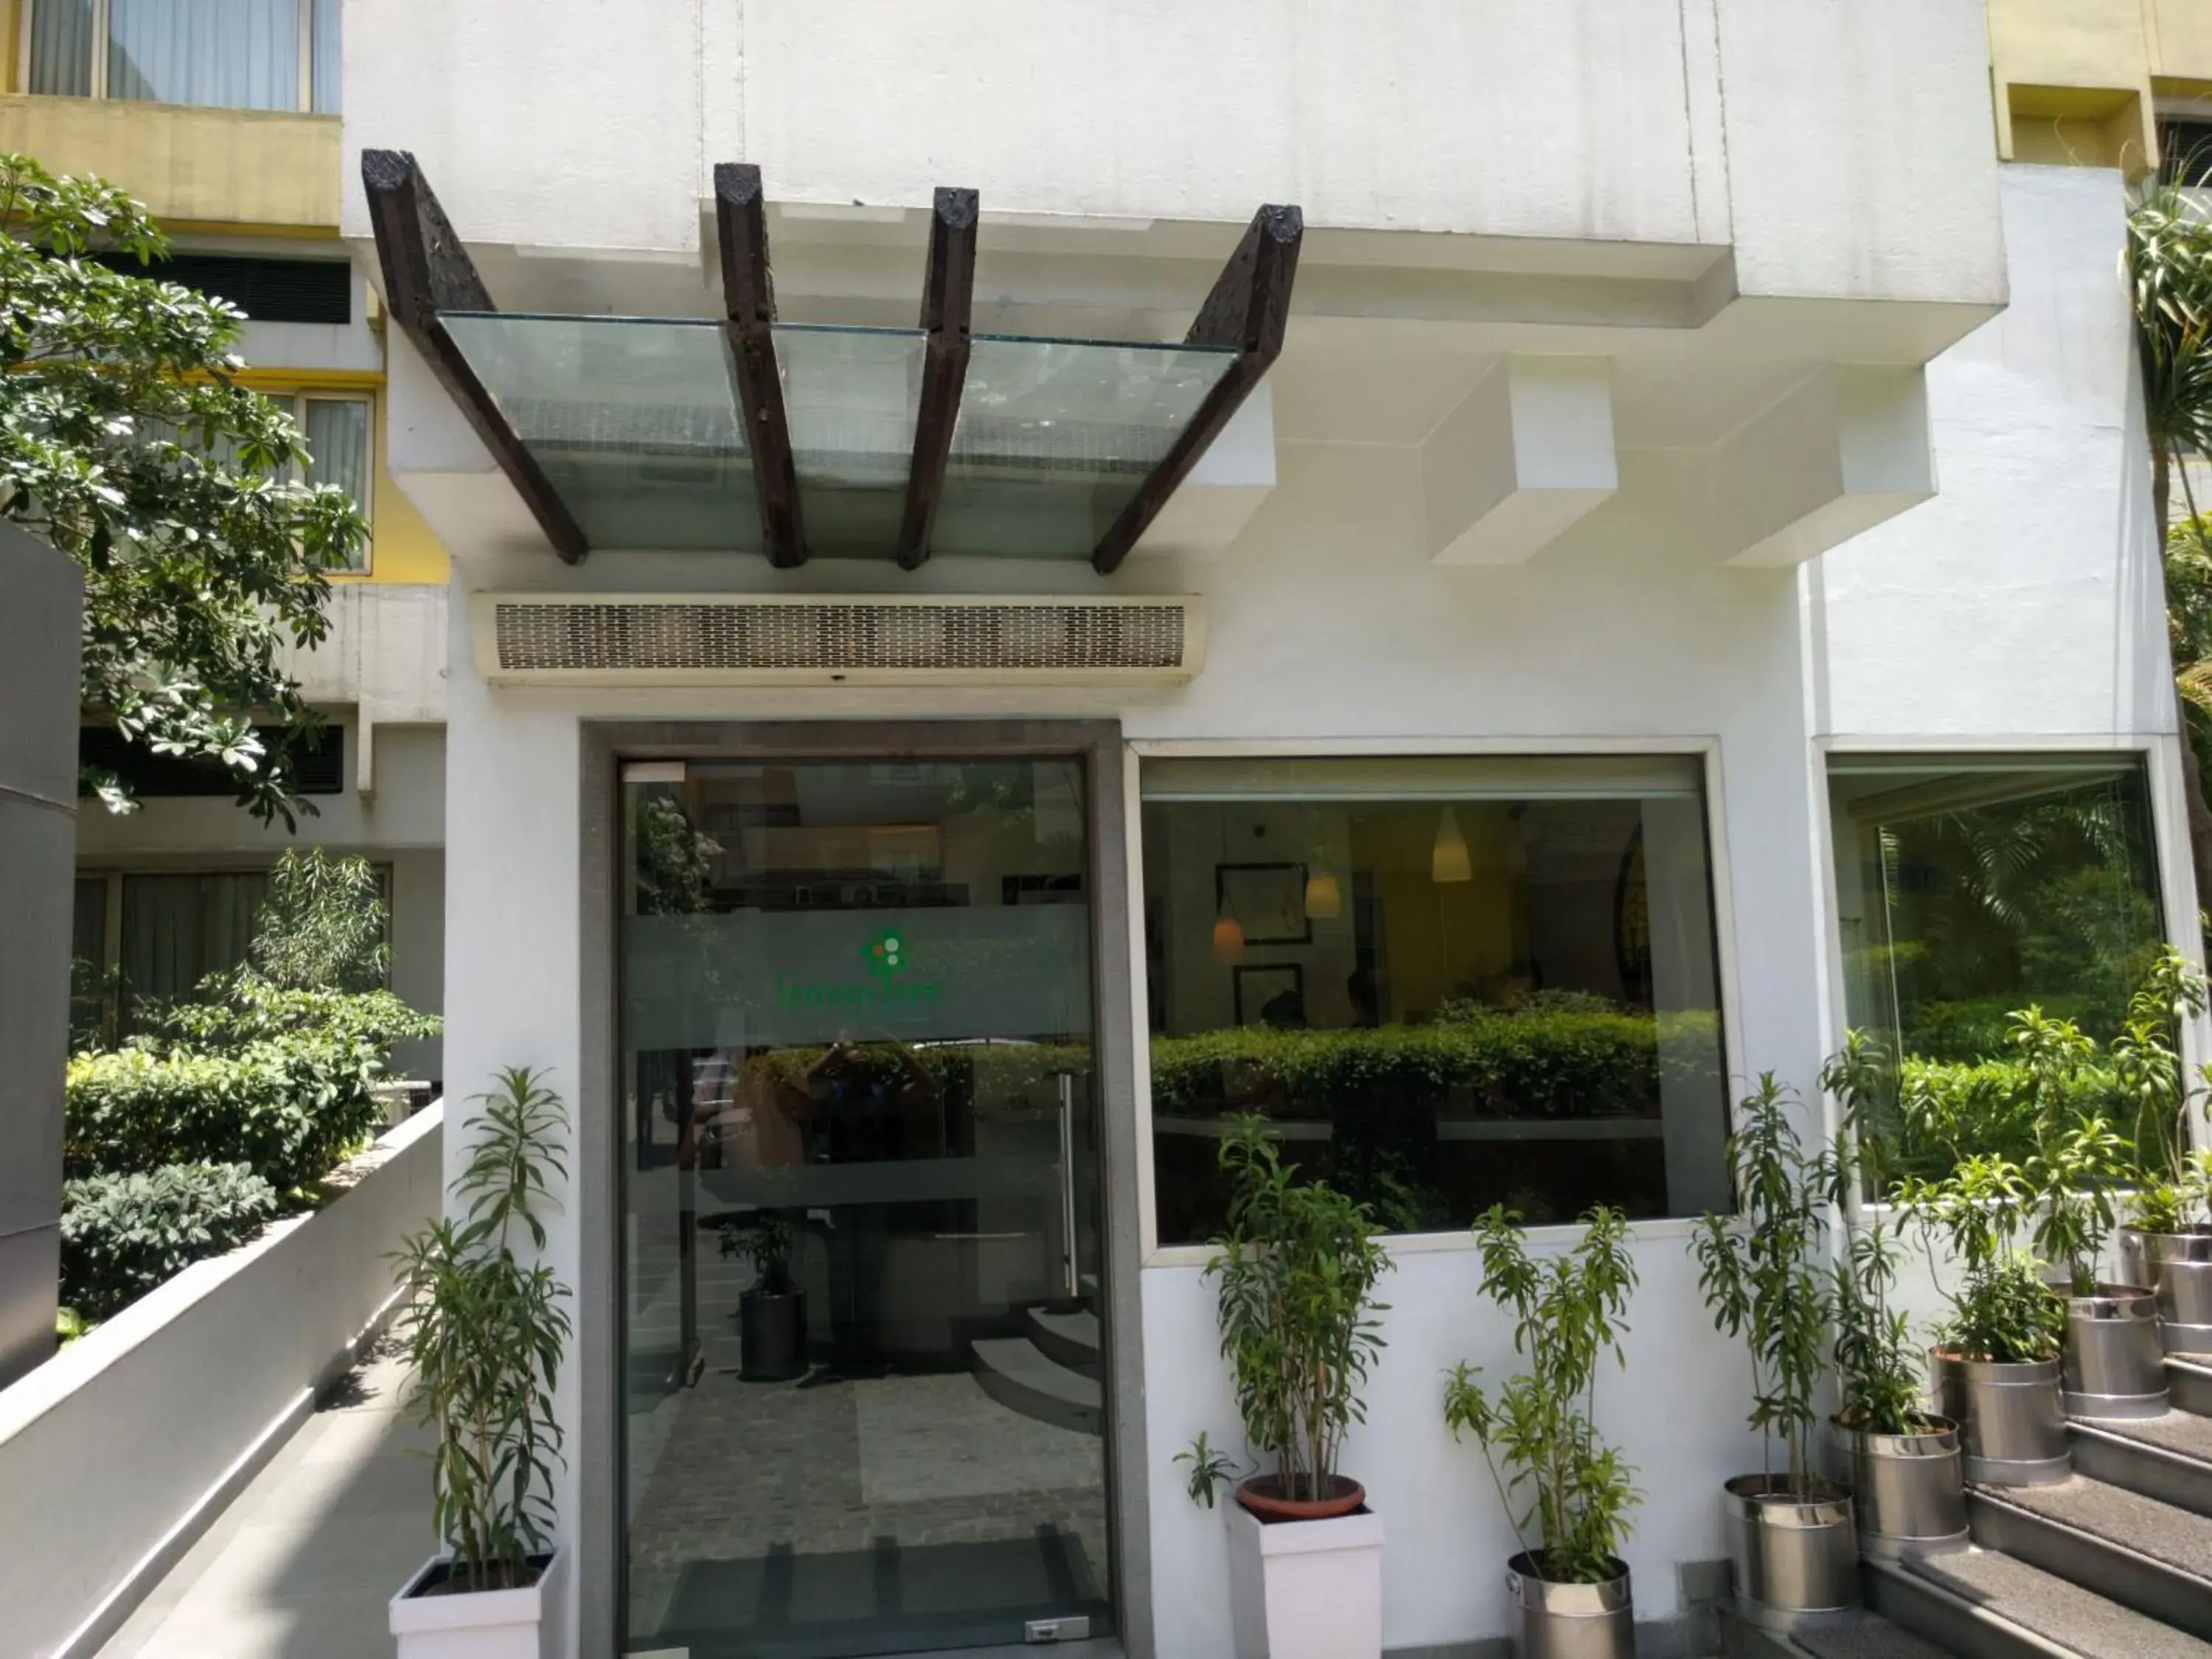 Facade/entrance in Lemon Tree Hotel, Udyog Vihar, Gurugram